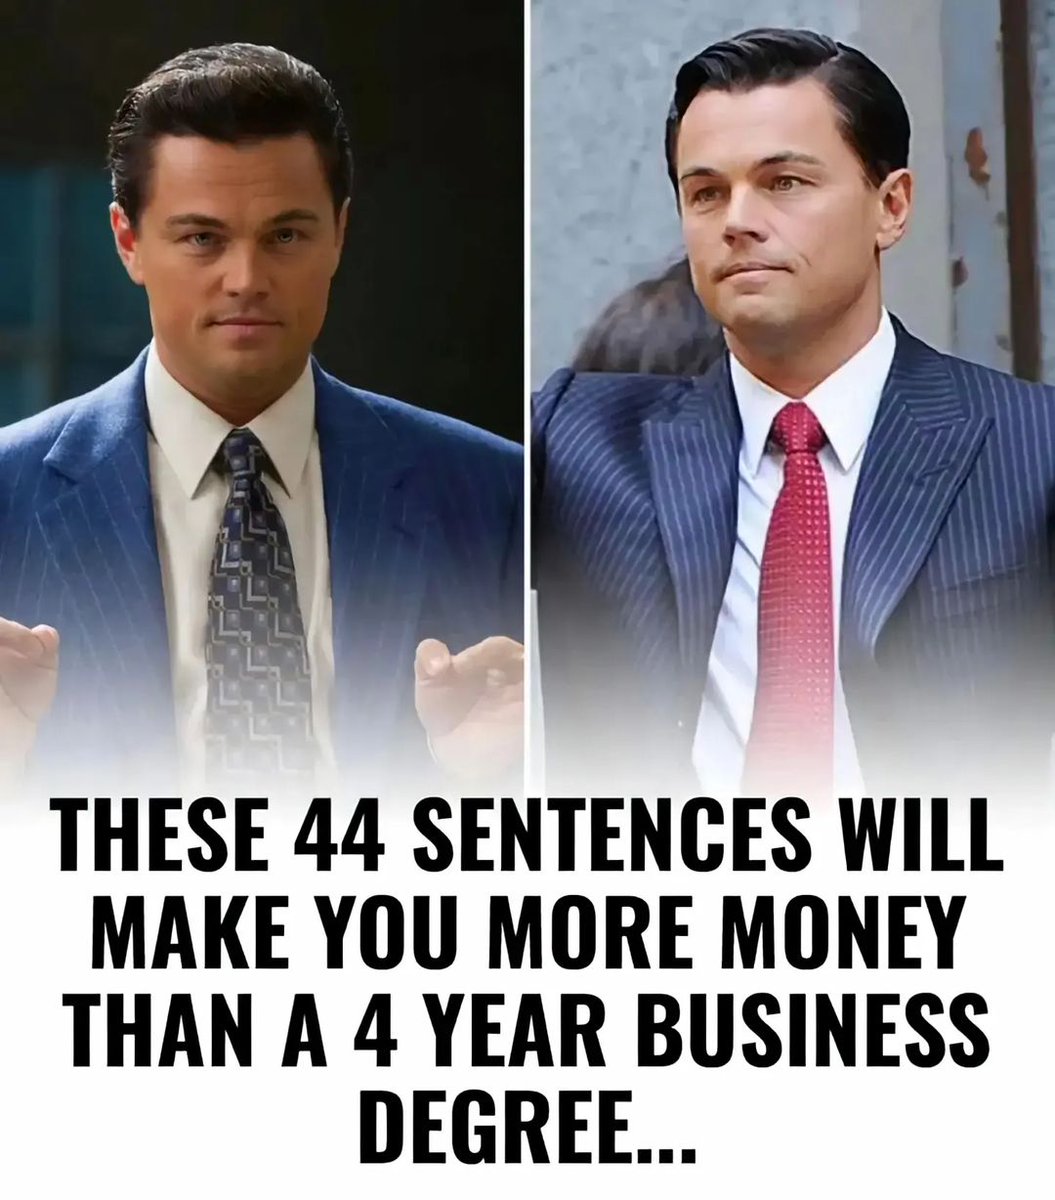 RT @MindWisdomMoney: These 44 sentences will make you more money than a 4 year business degree: https://t.co/8U2ZJfgM1k